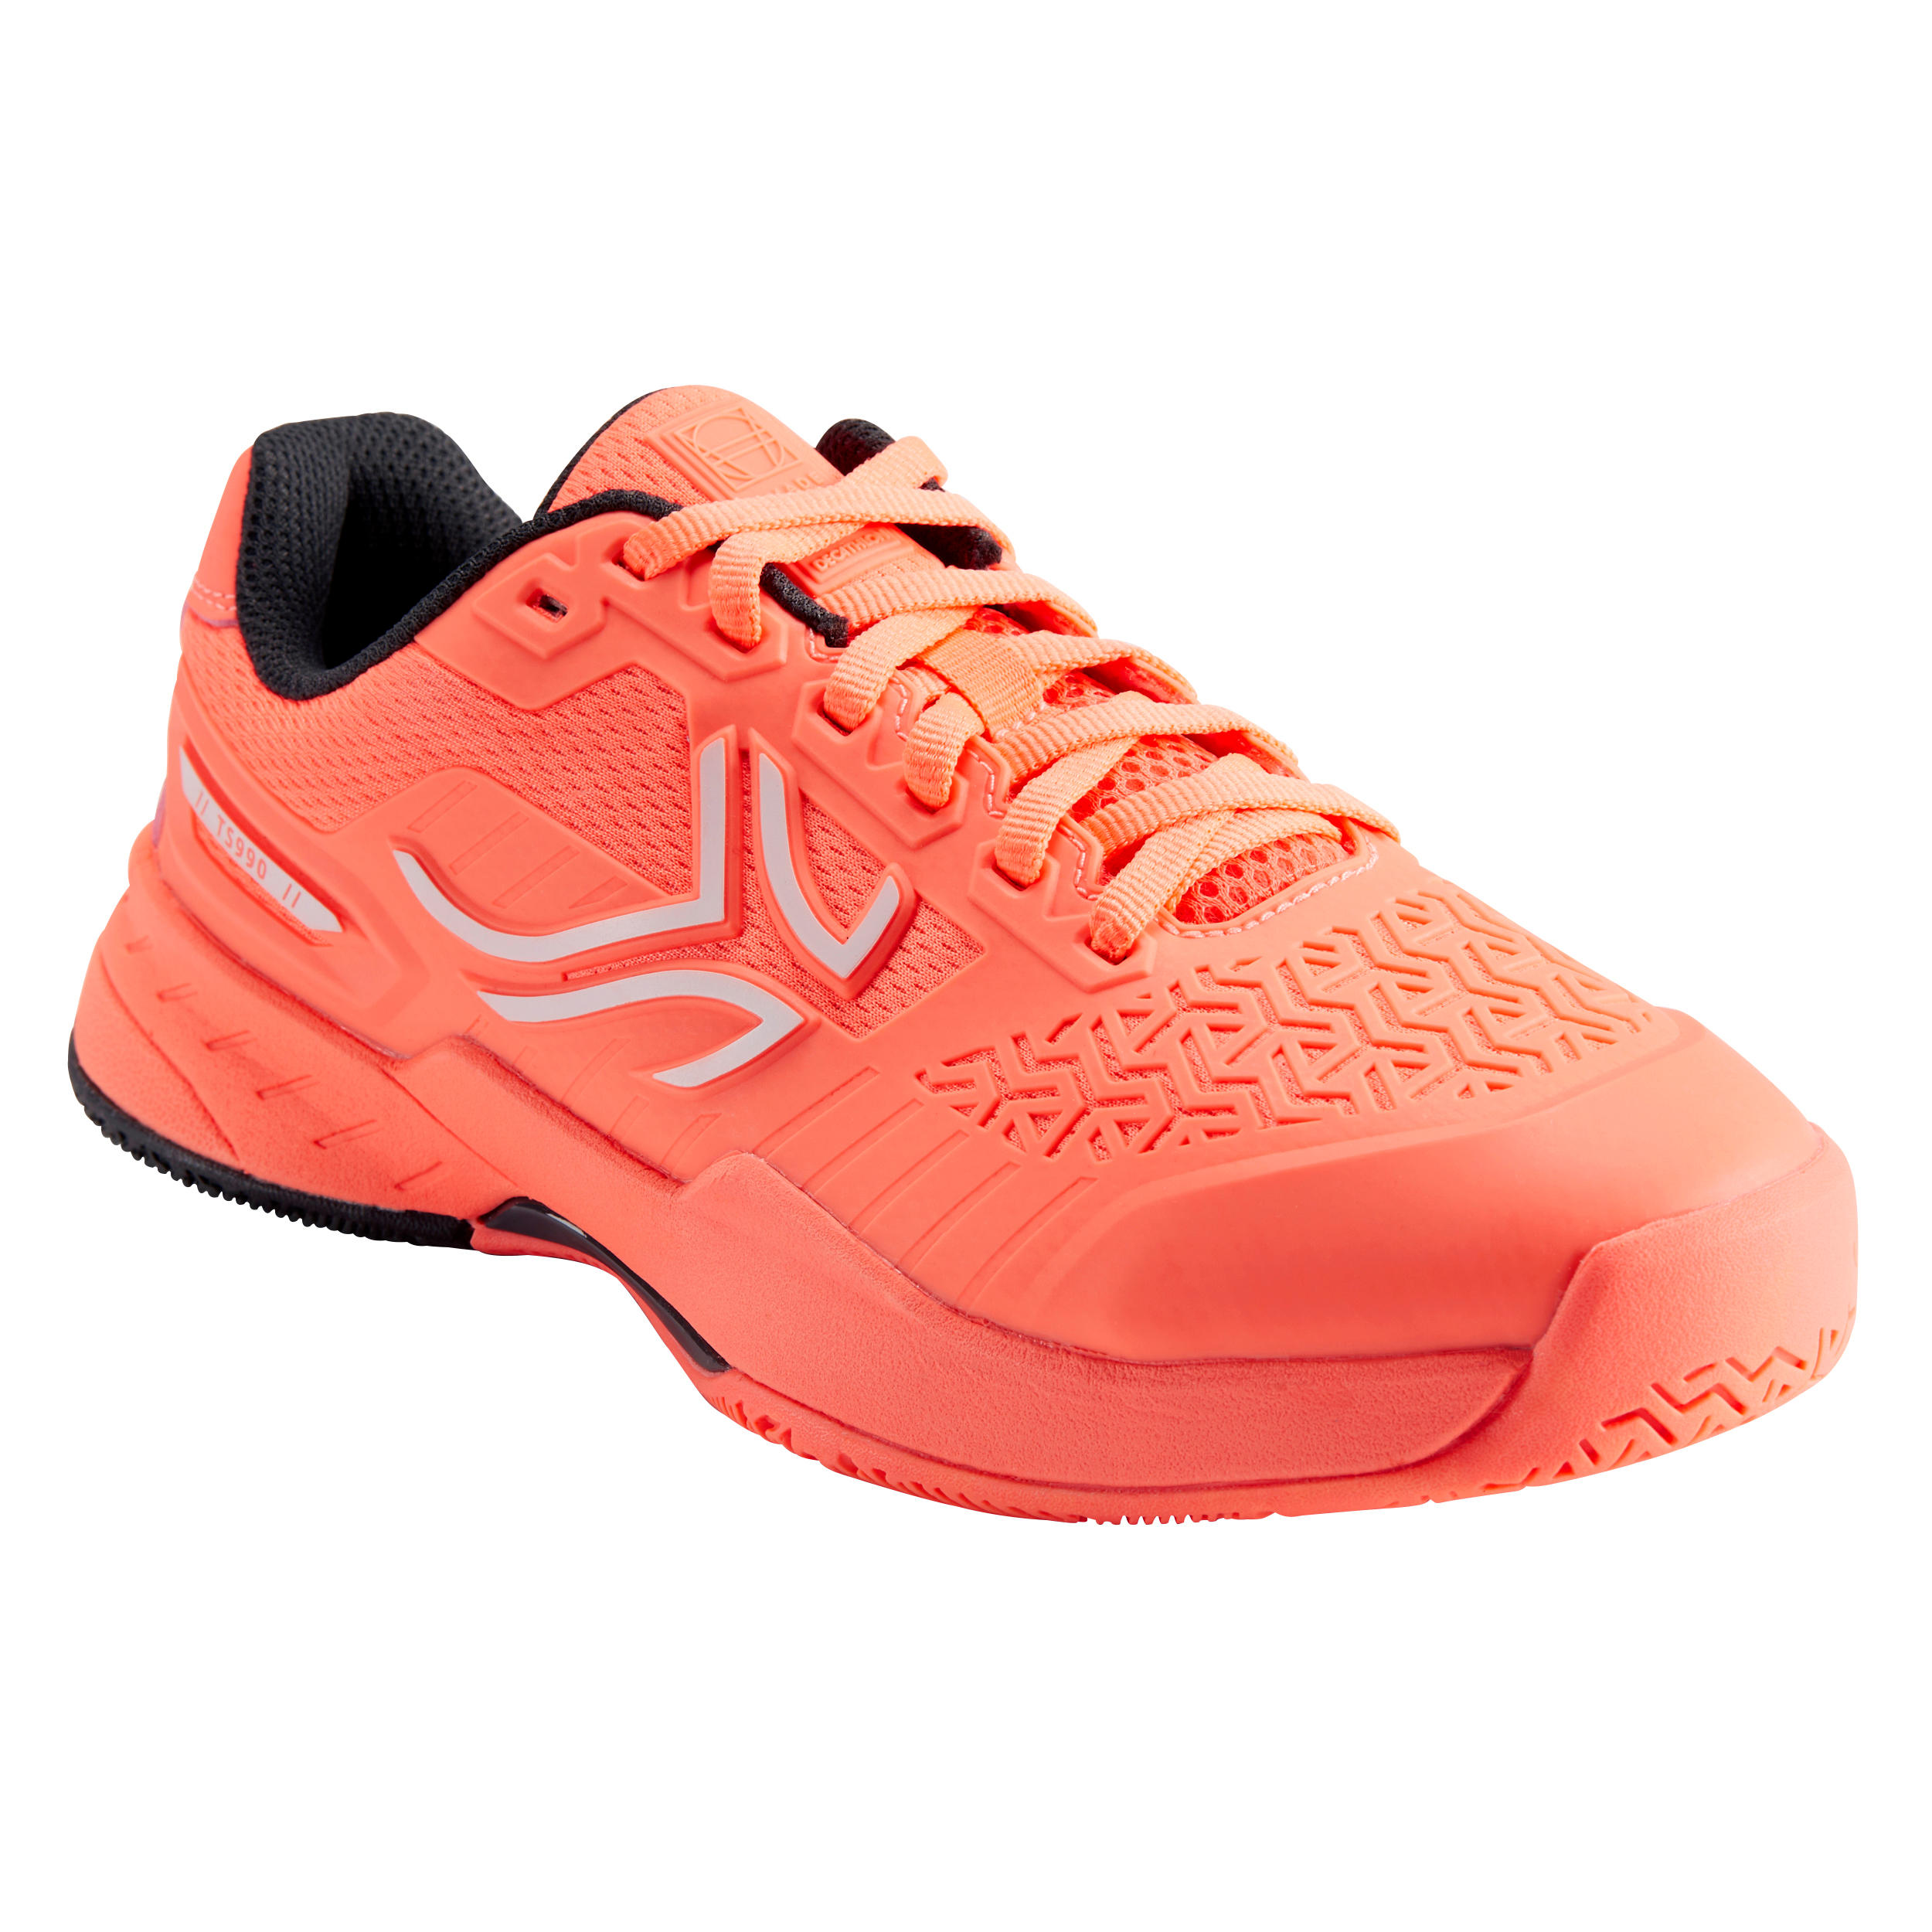 coral tennis shoes